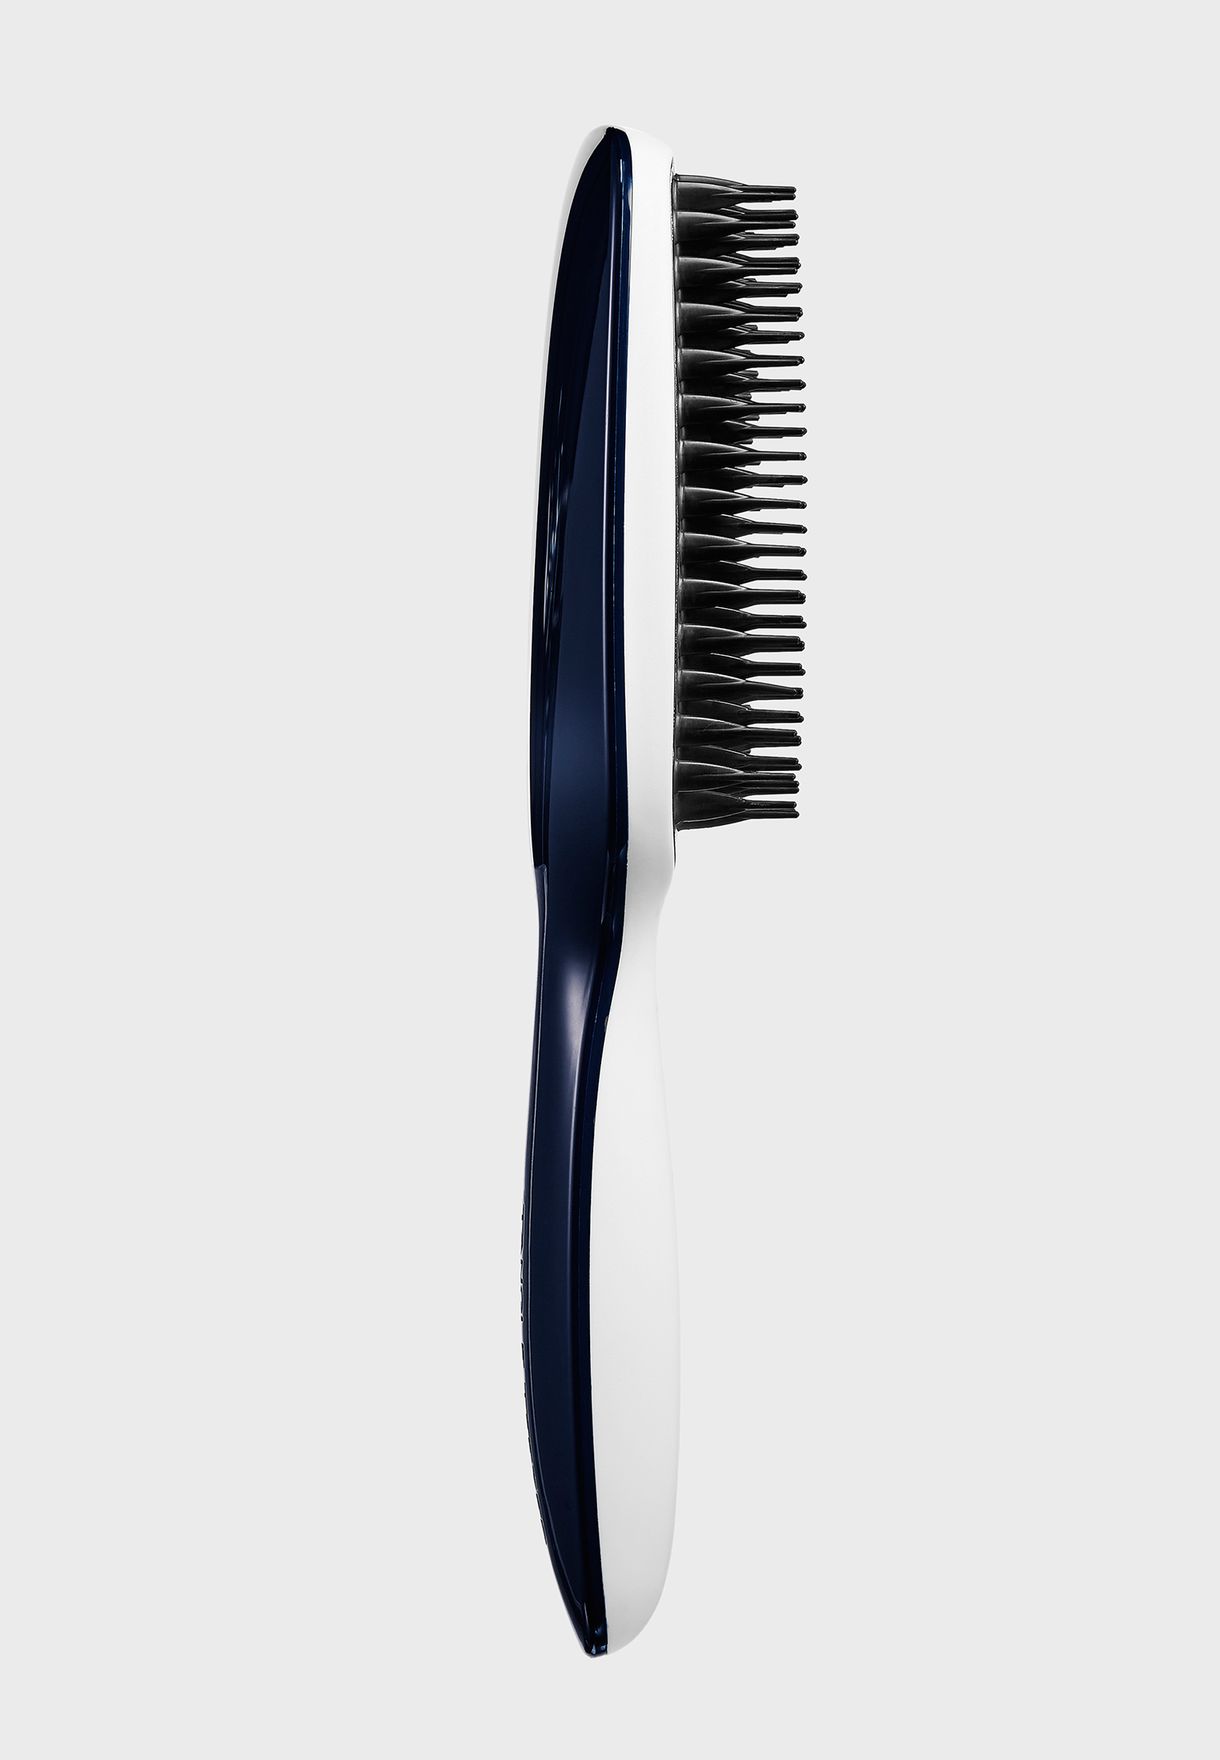 The Smoothing Tool Blow Drying Hairbrush